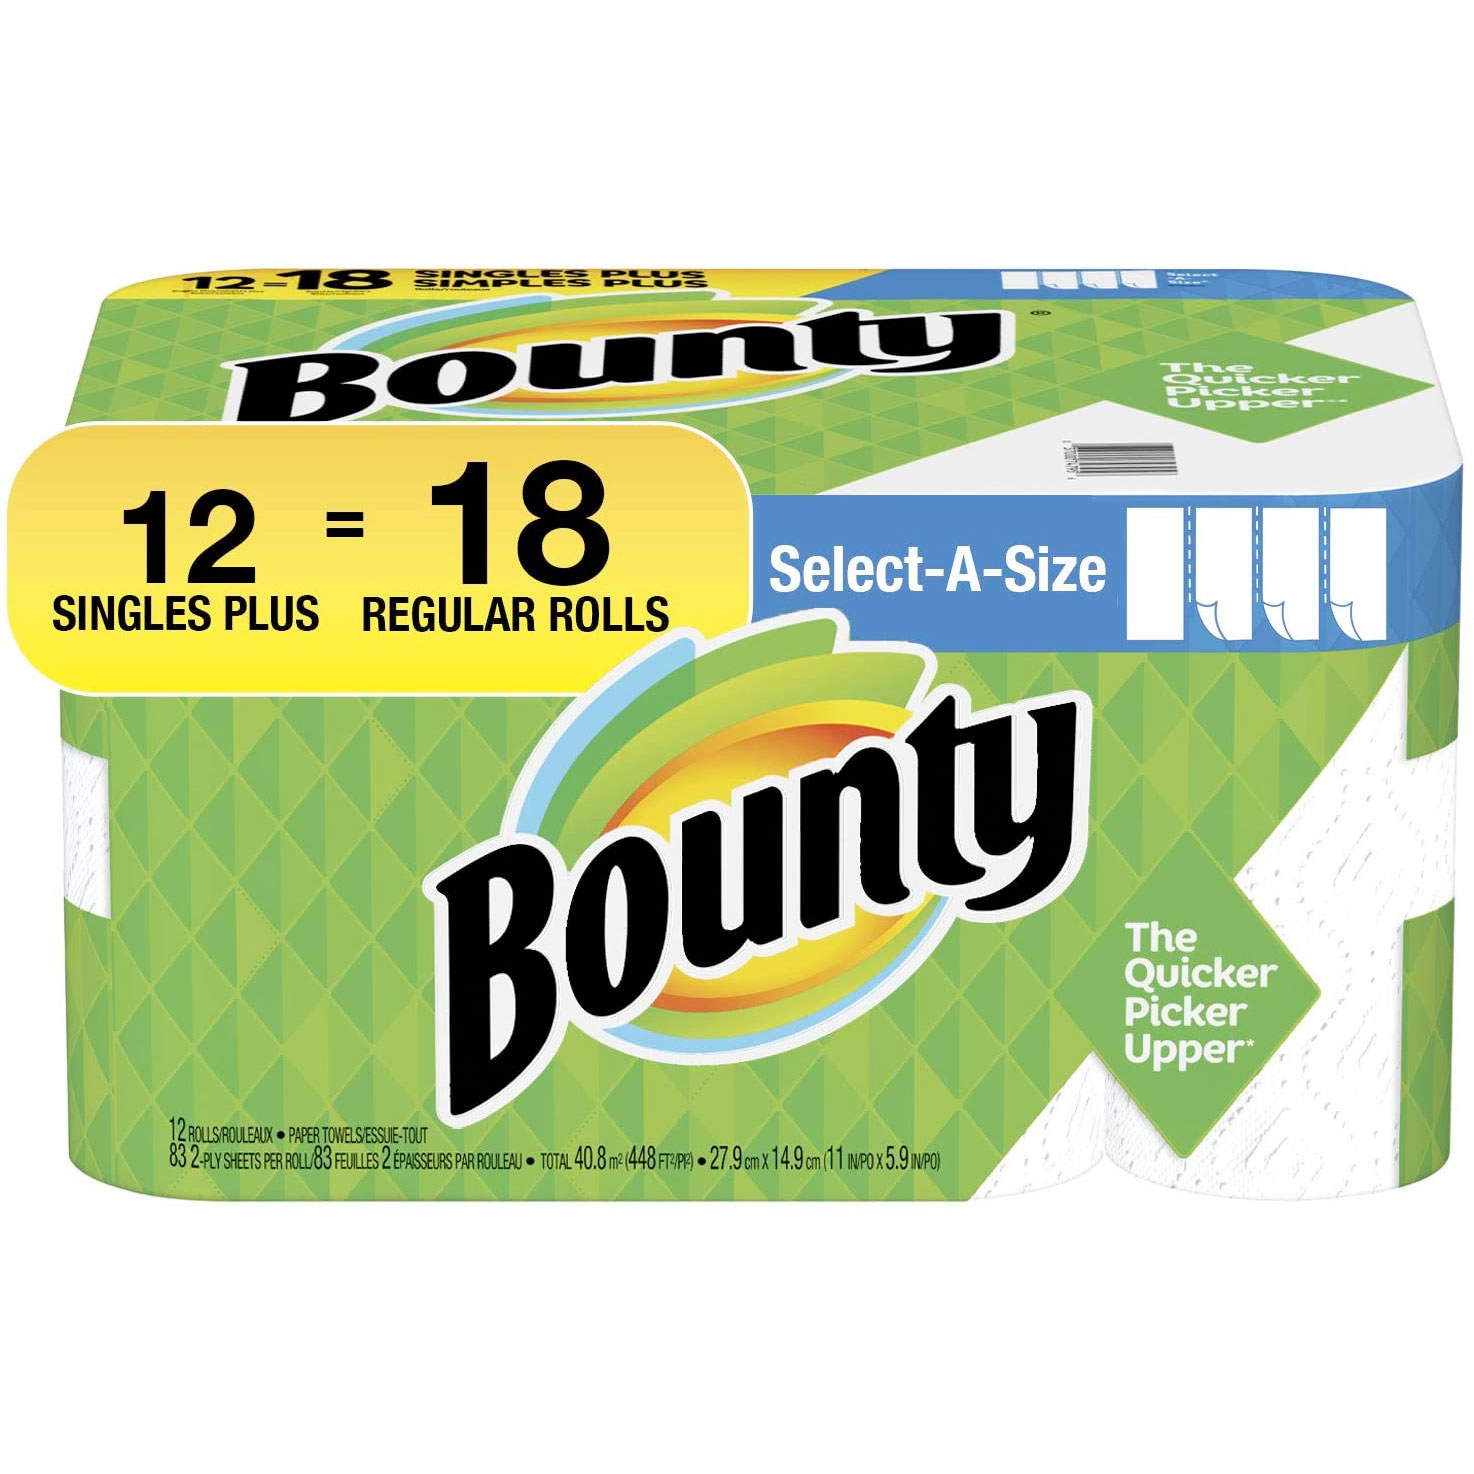 Amazon：Bounty Select-A-Size Paper Towels (12 Single Plus Rolls)只賣$18